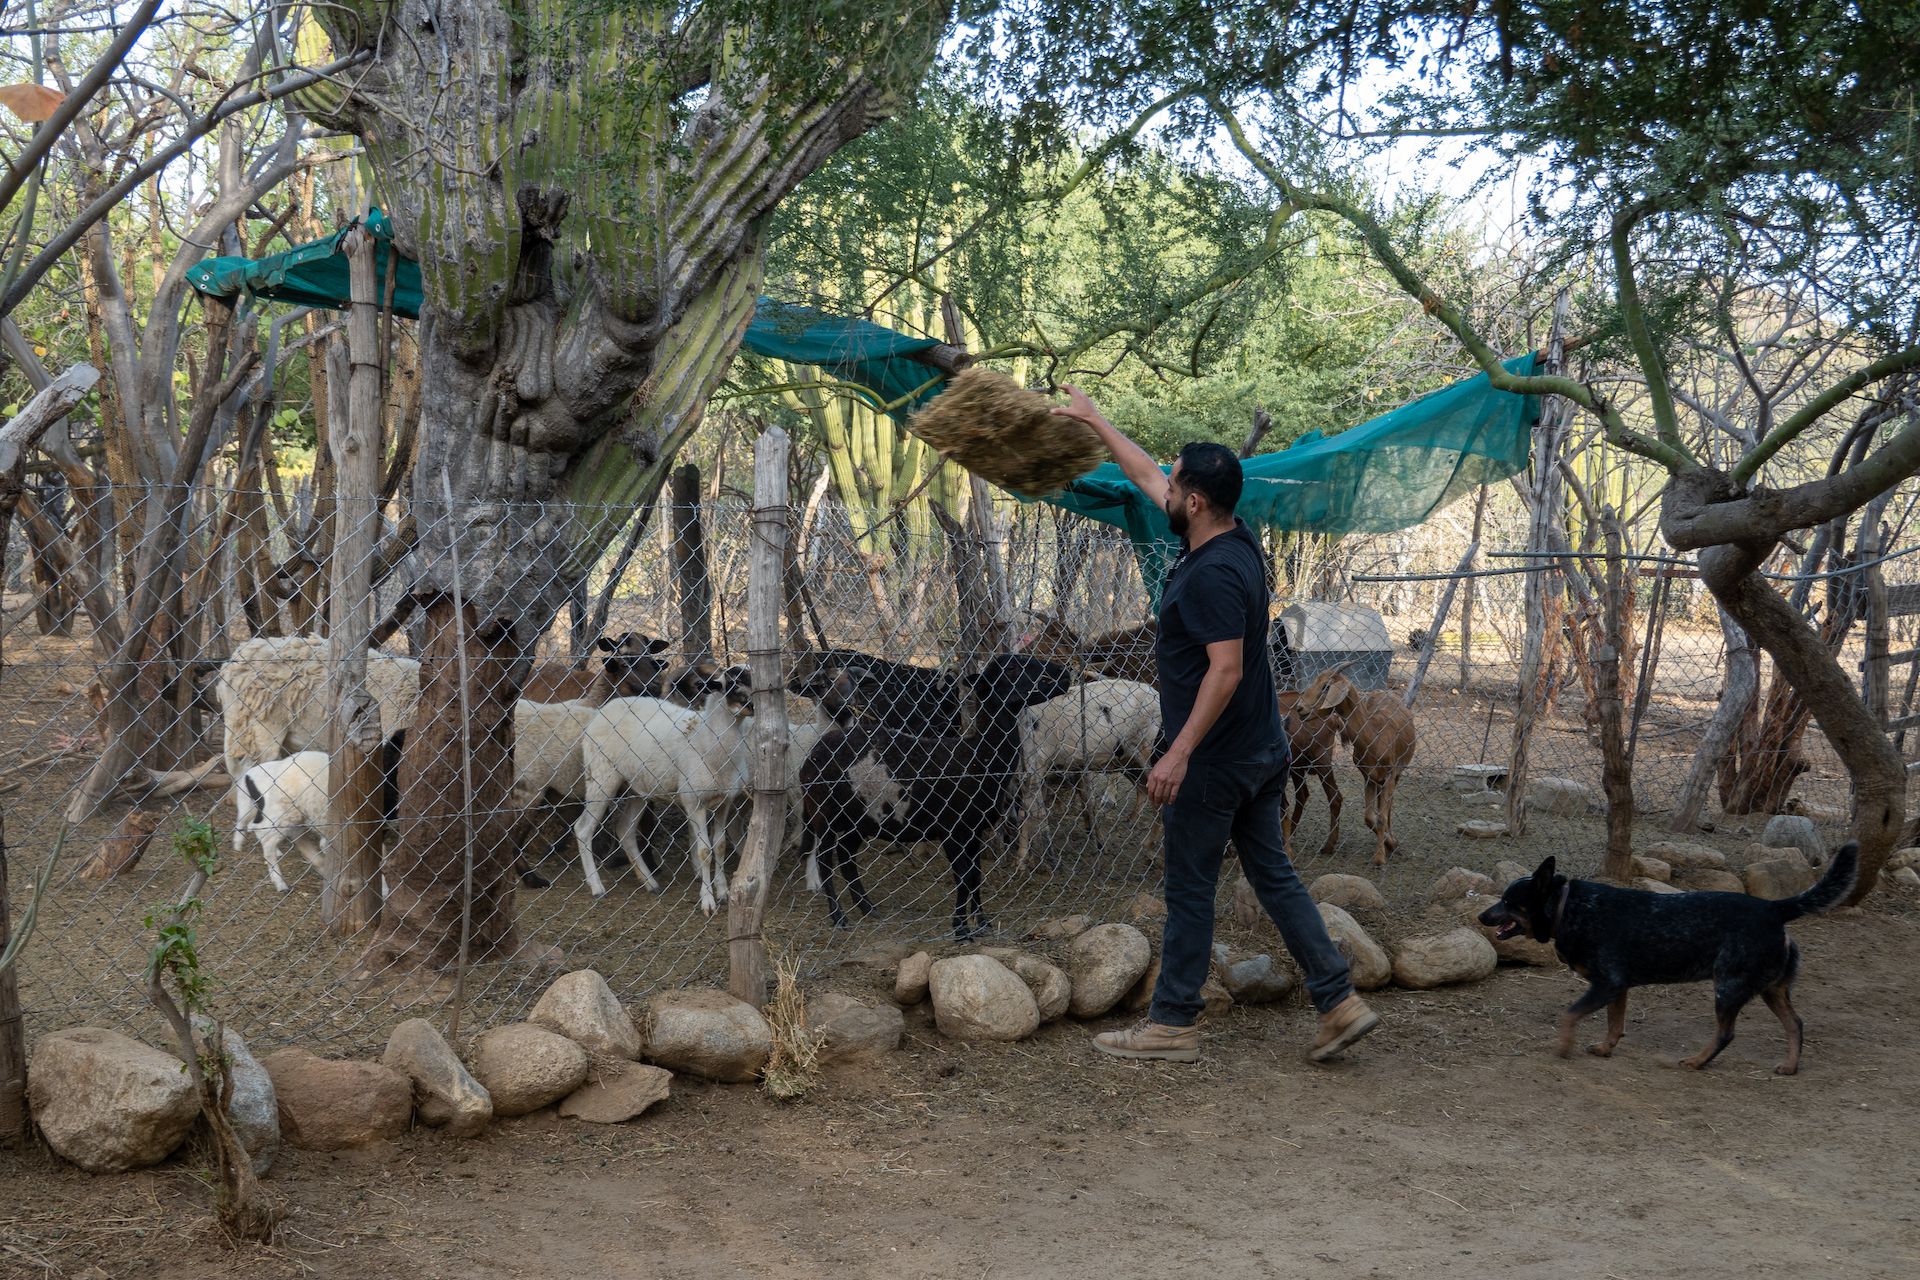 The caretaker feeding the goats